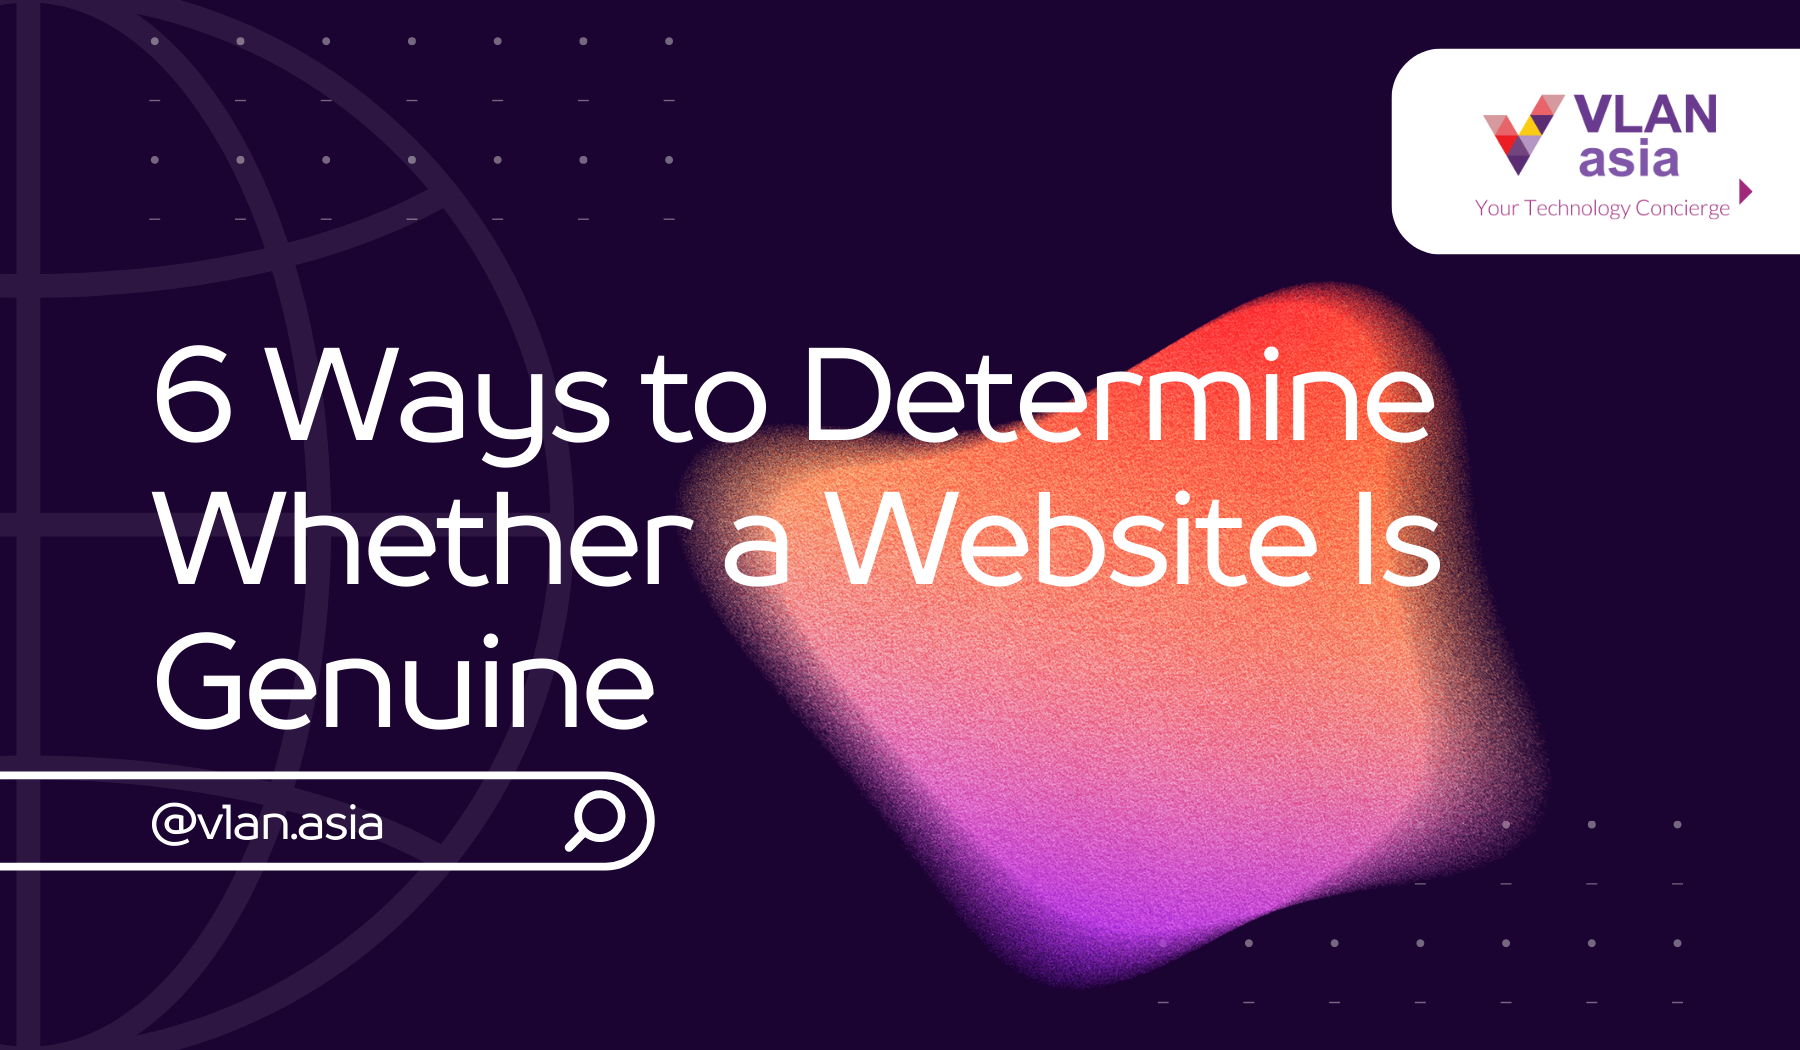 6 ways to determine whether a website is genuine